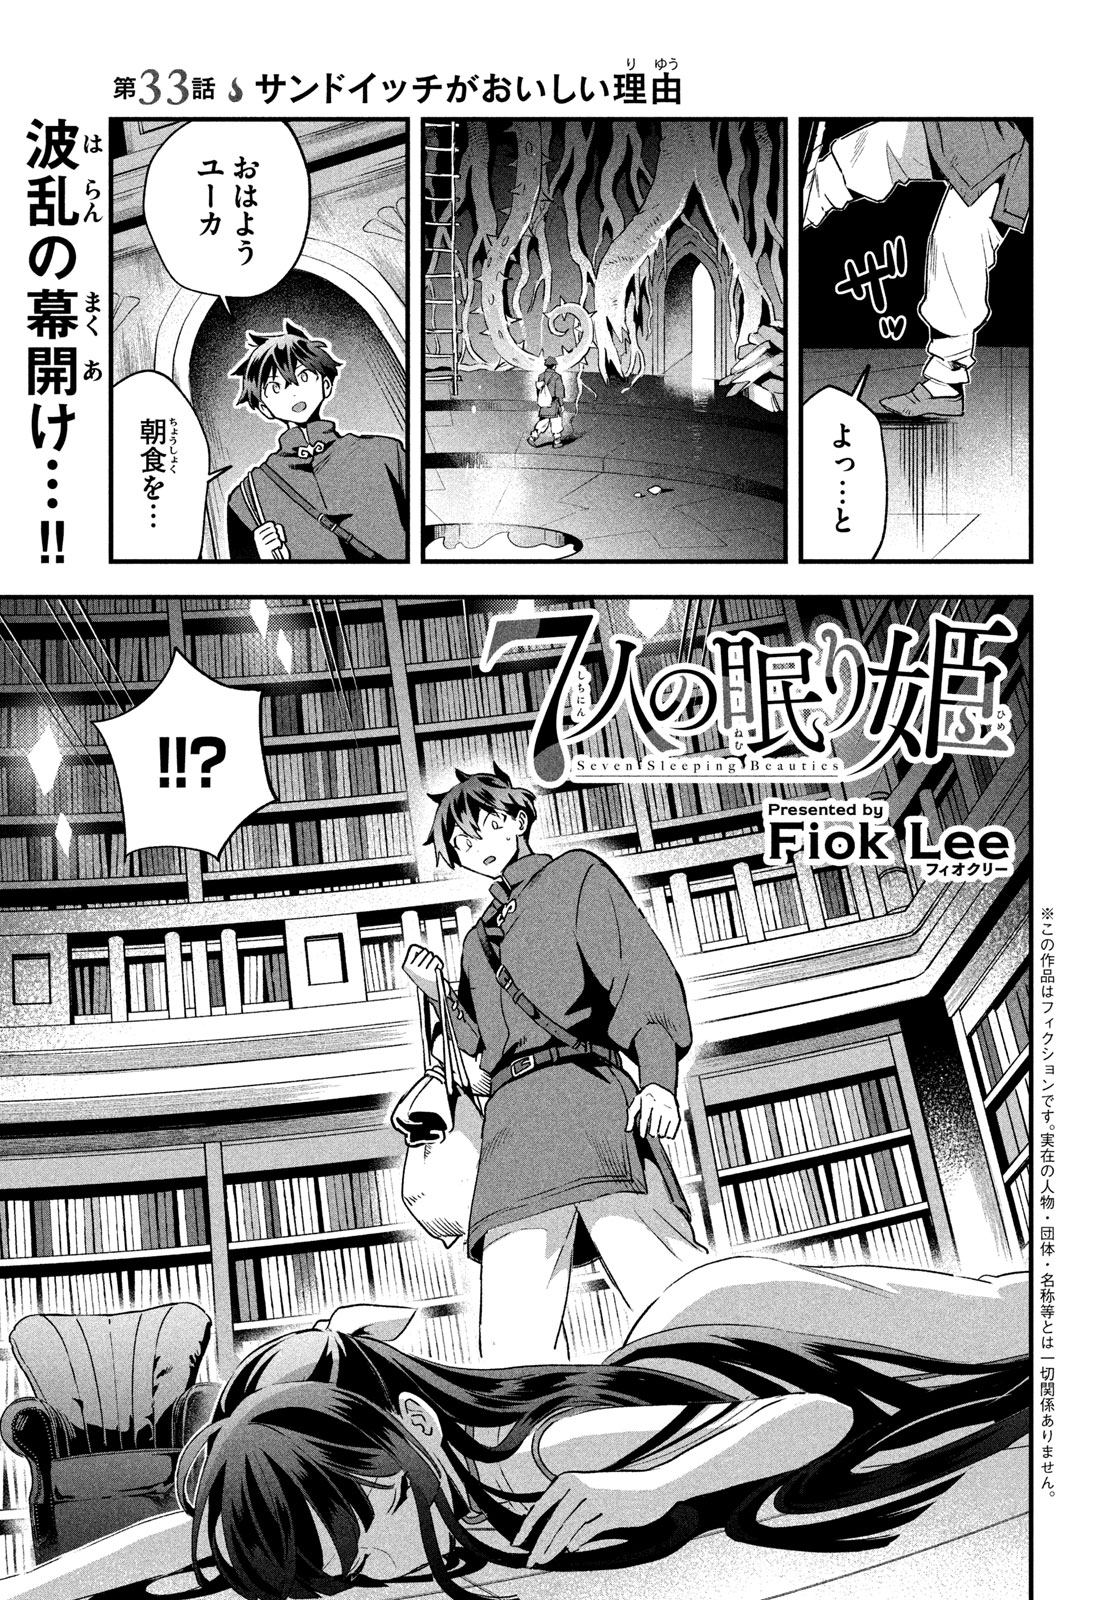 7-nin no Nemuri Hime - Chapter 33 - Page 1